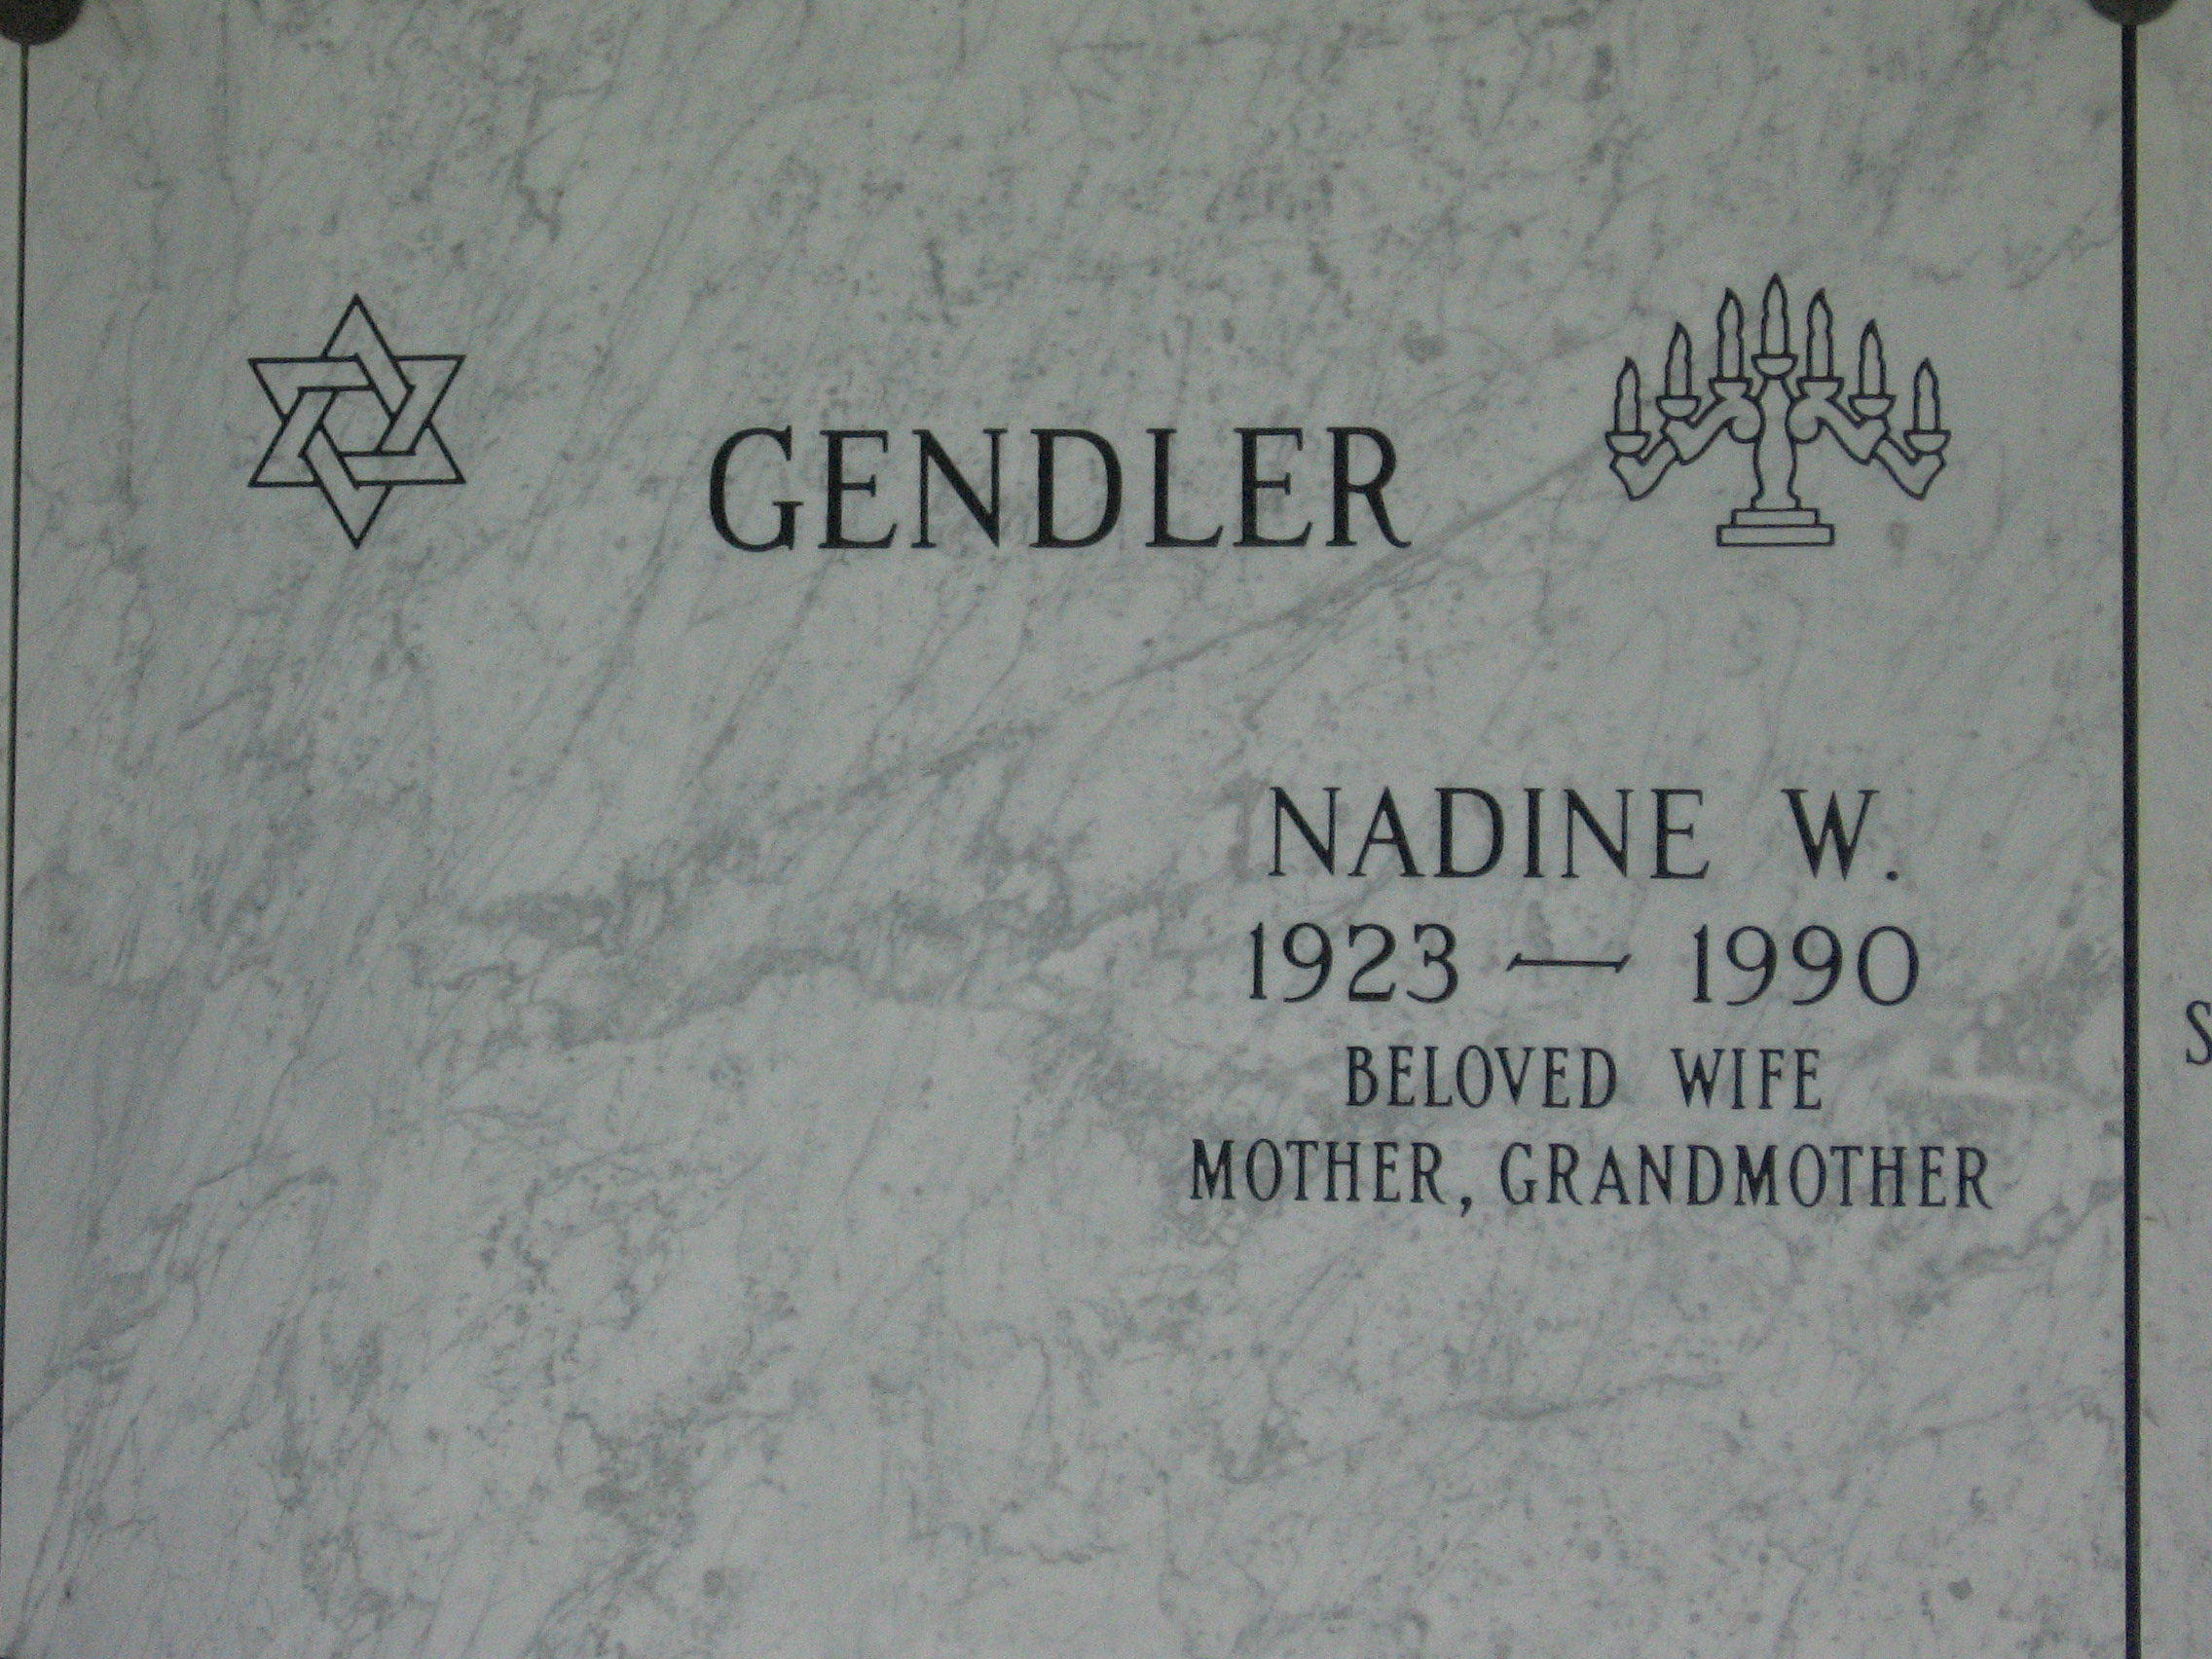 Nadine W Gendler